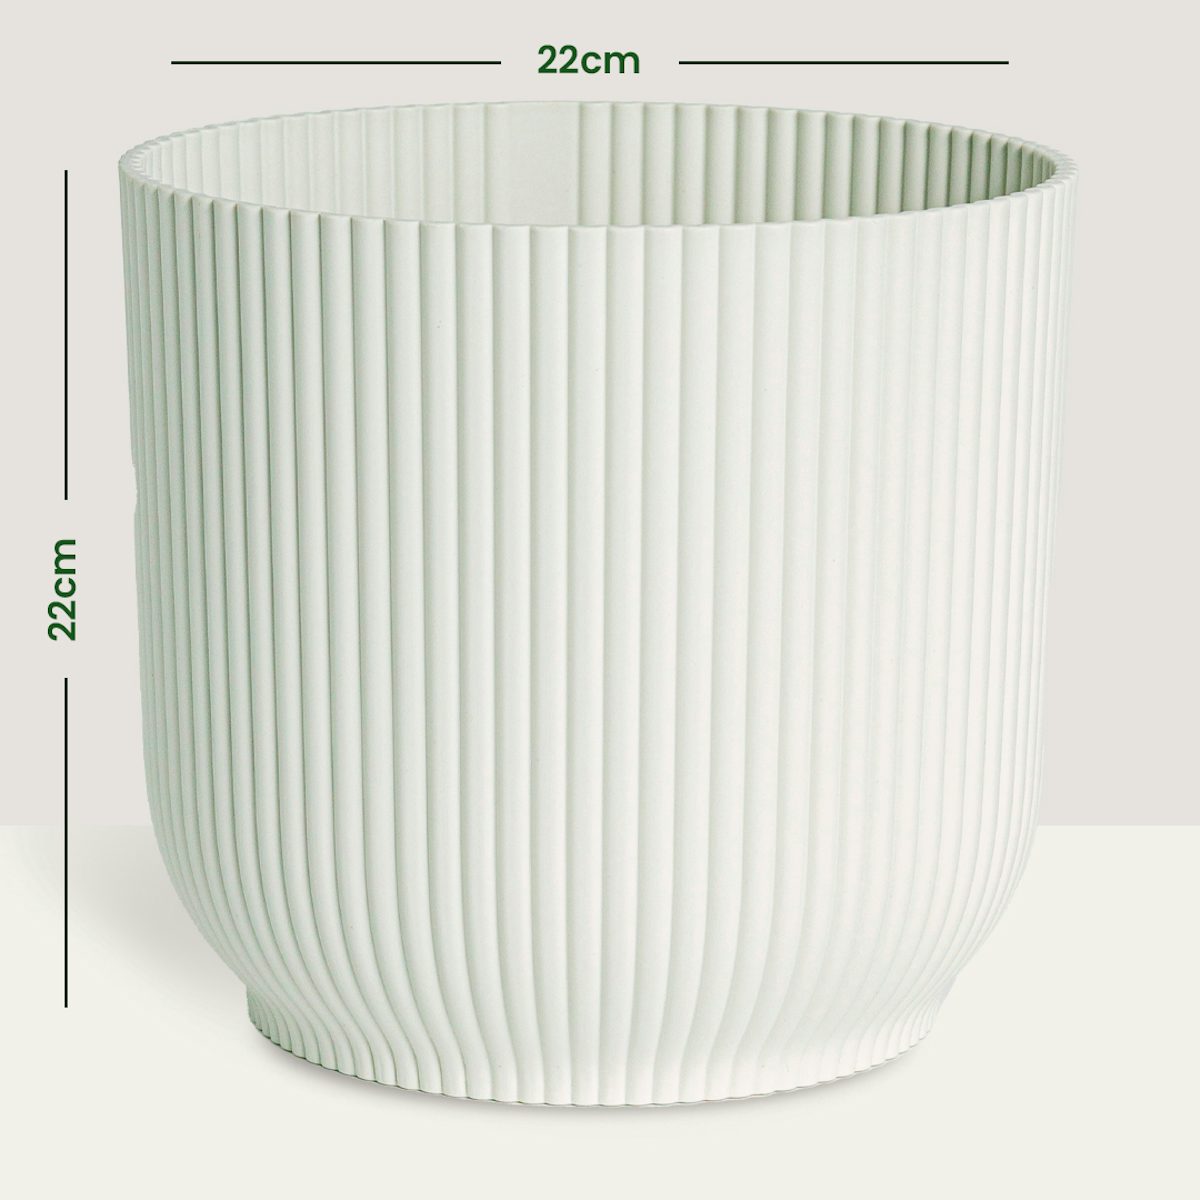 Toronto Pot - XL/22cm